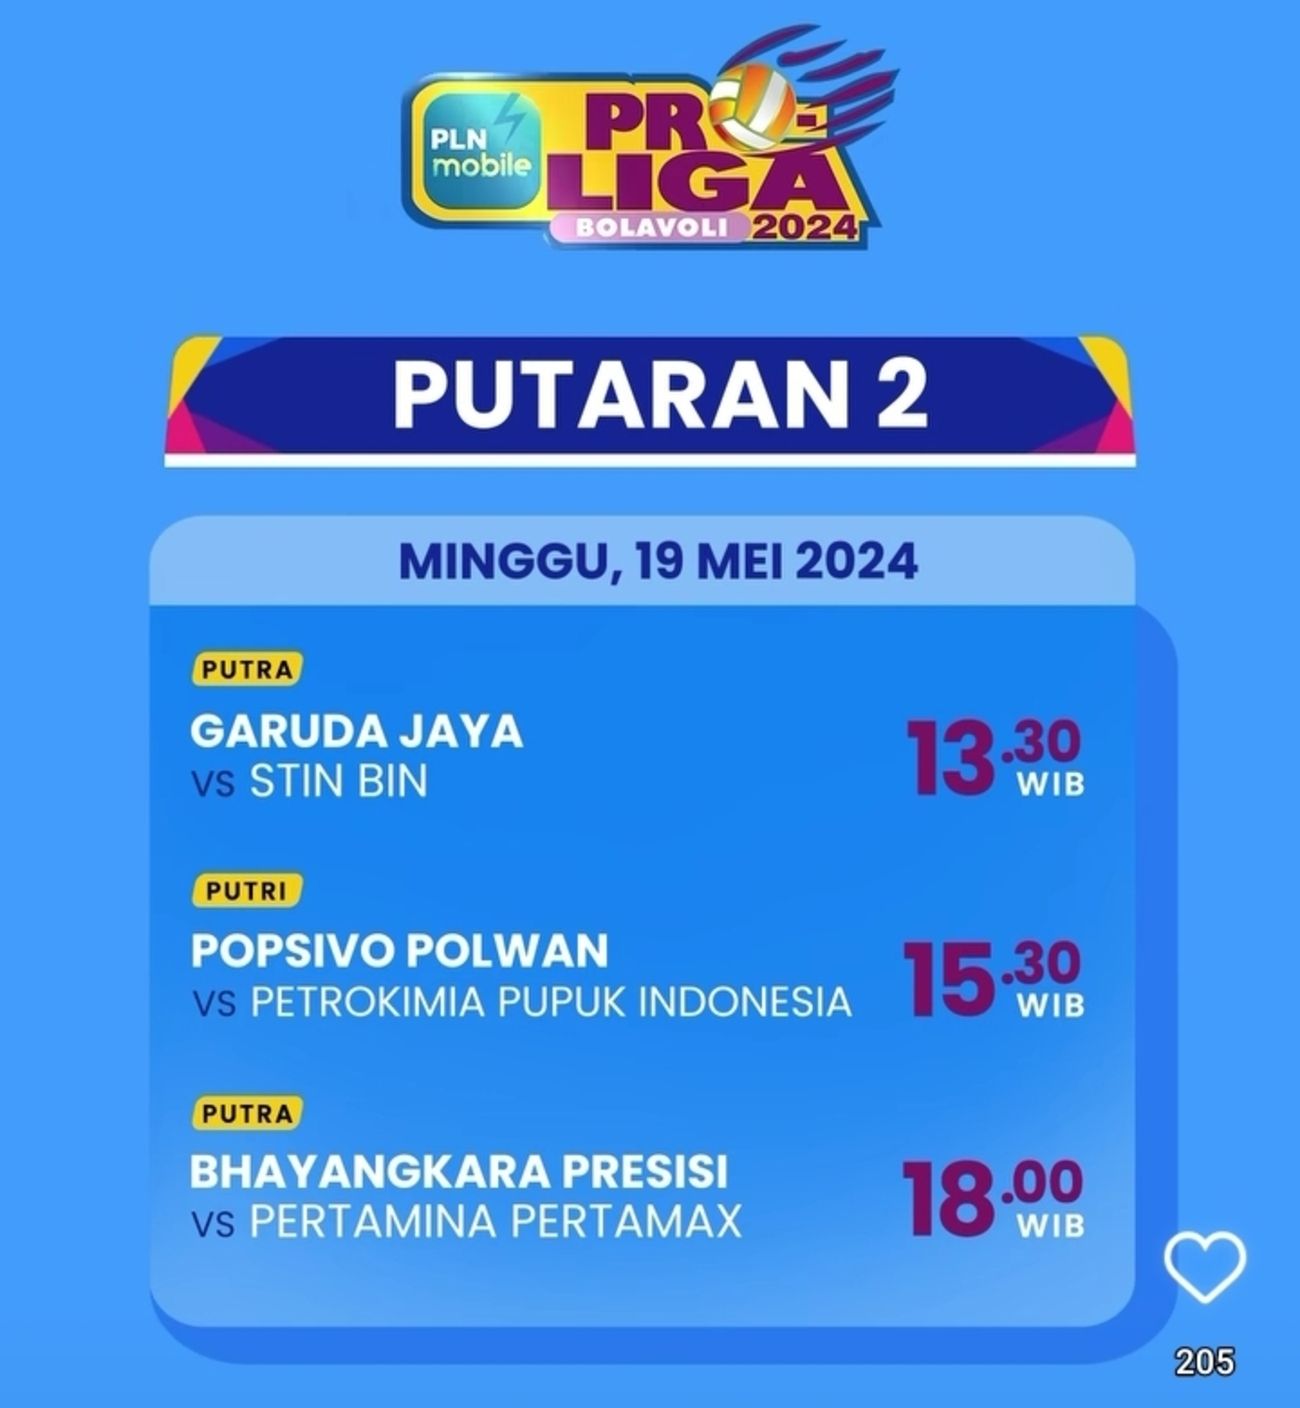 Jadwal Proliga Hari Ini 19 Mei 2024: Garuda Jaya vs STIN BIN, Popsivo Polwan vs Gresik Petrokimia Pupuk